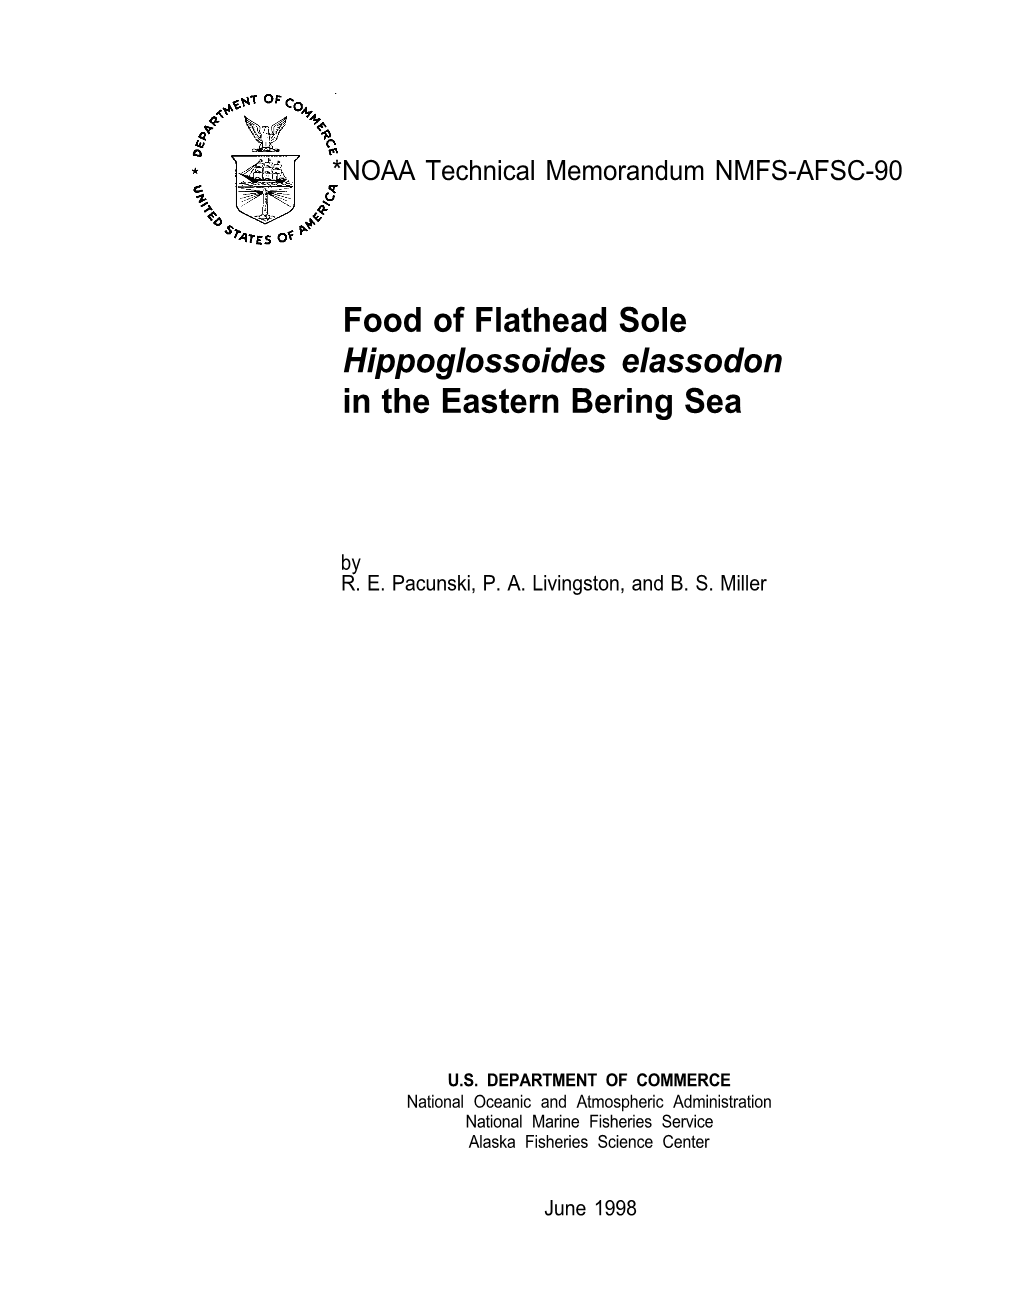 Food of Flathead Sole Hippoglossoides Elassodon in the Eastern Bering Sea